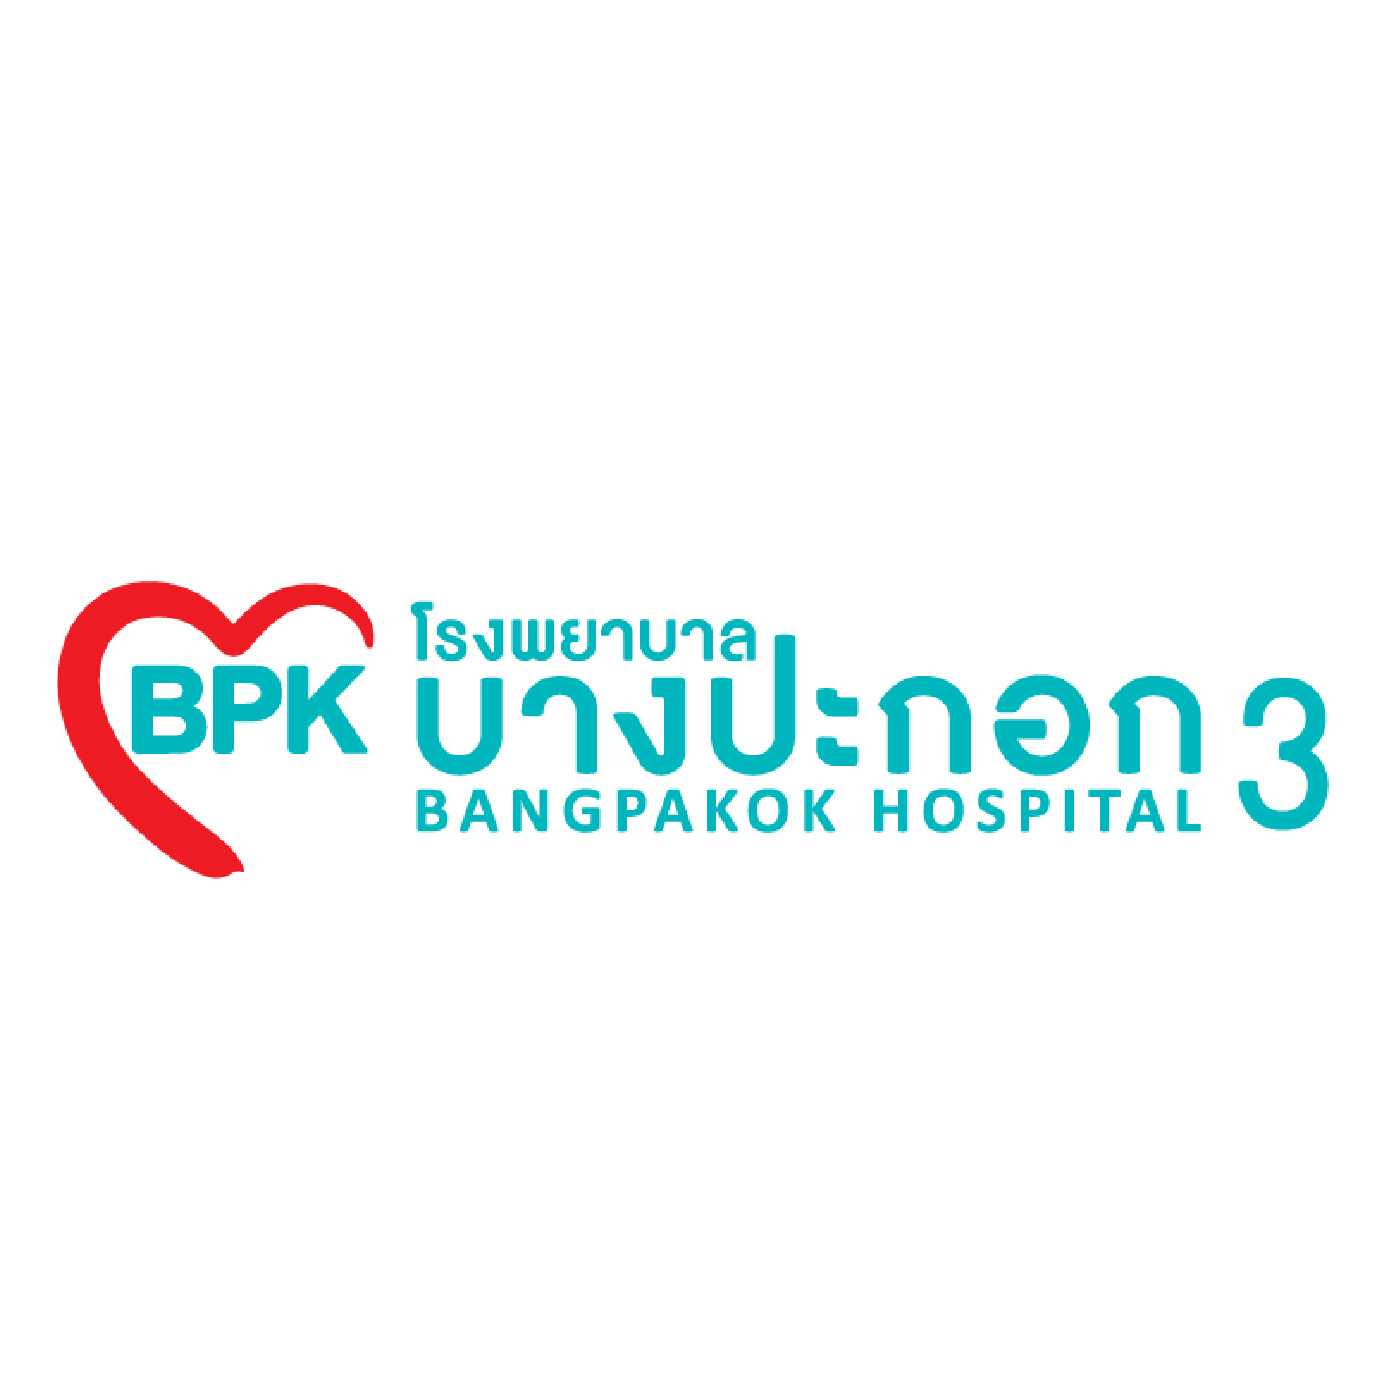 Bangpakok 3 Hospital 01